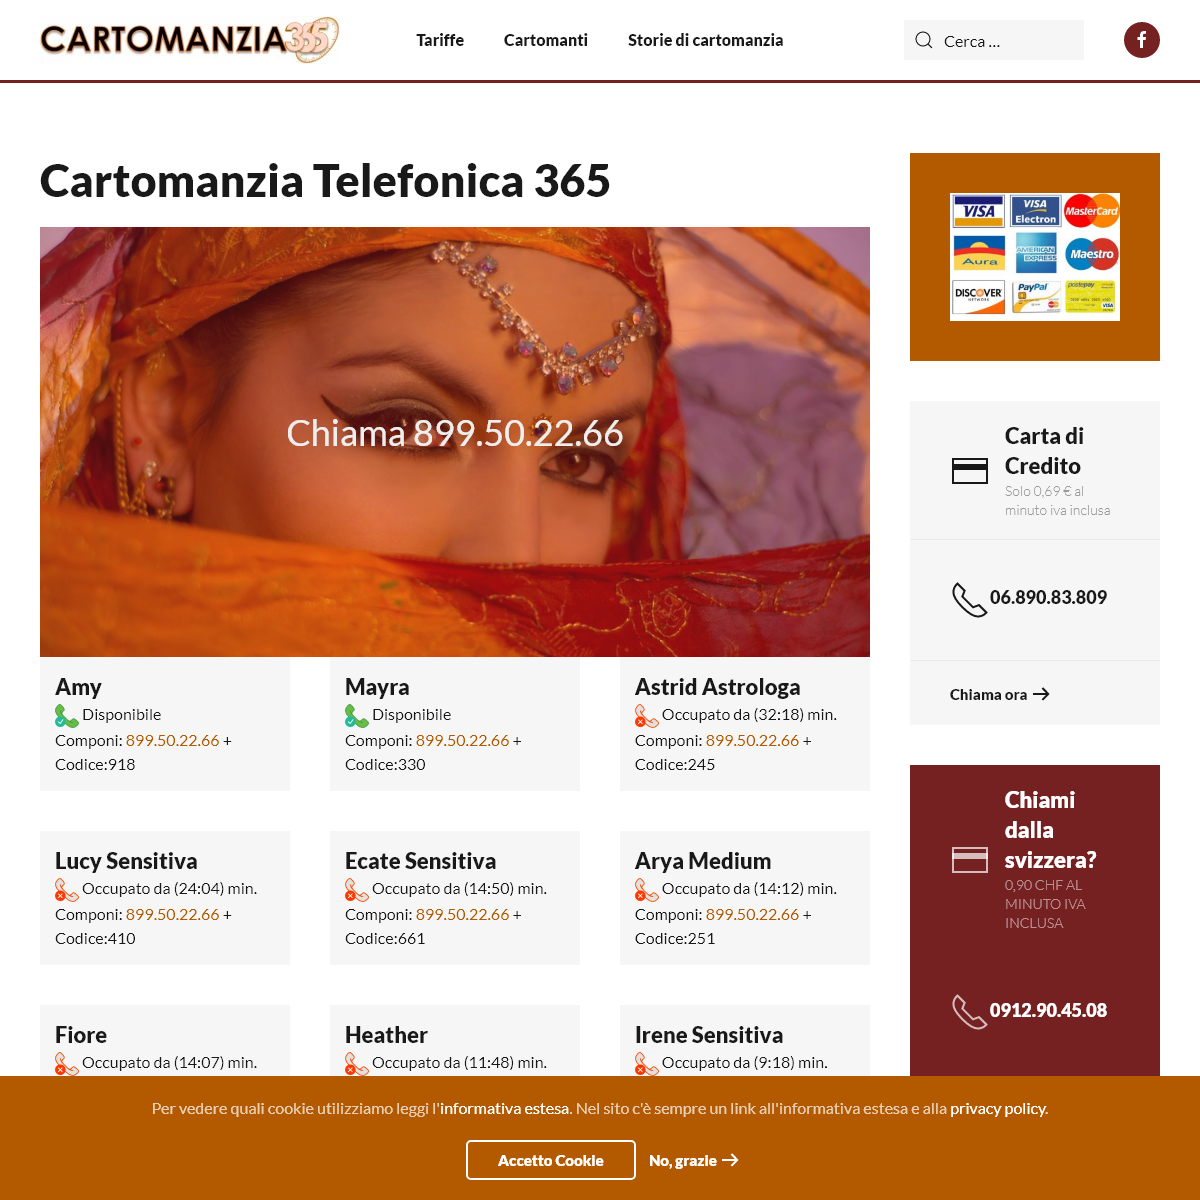 A complete backup of cartomanzia365.it